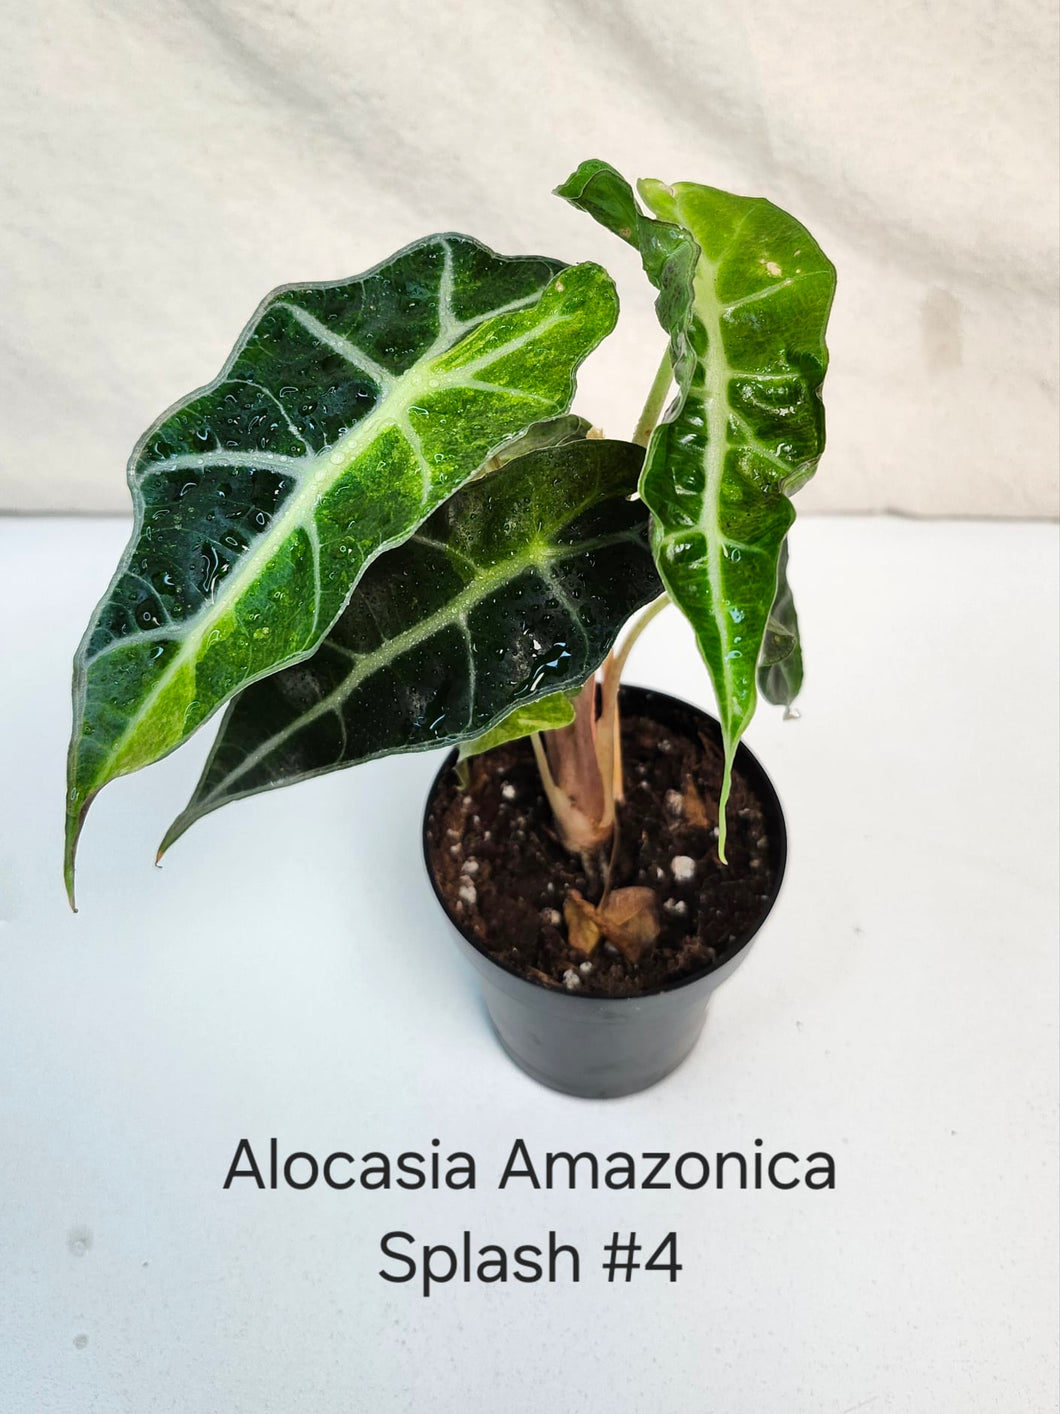 Alocasia Amazonica aurea splash #4